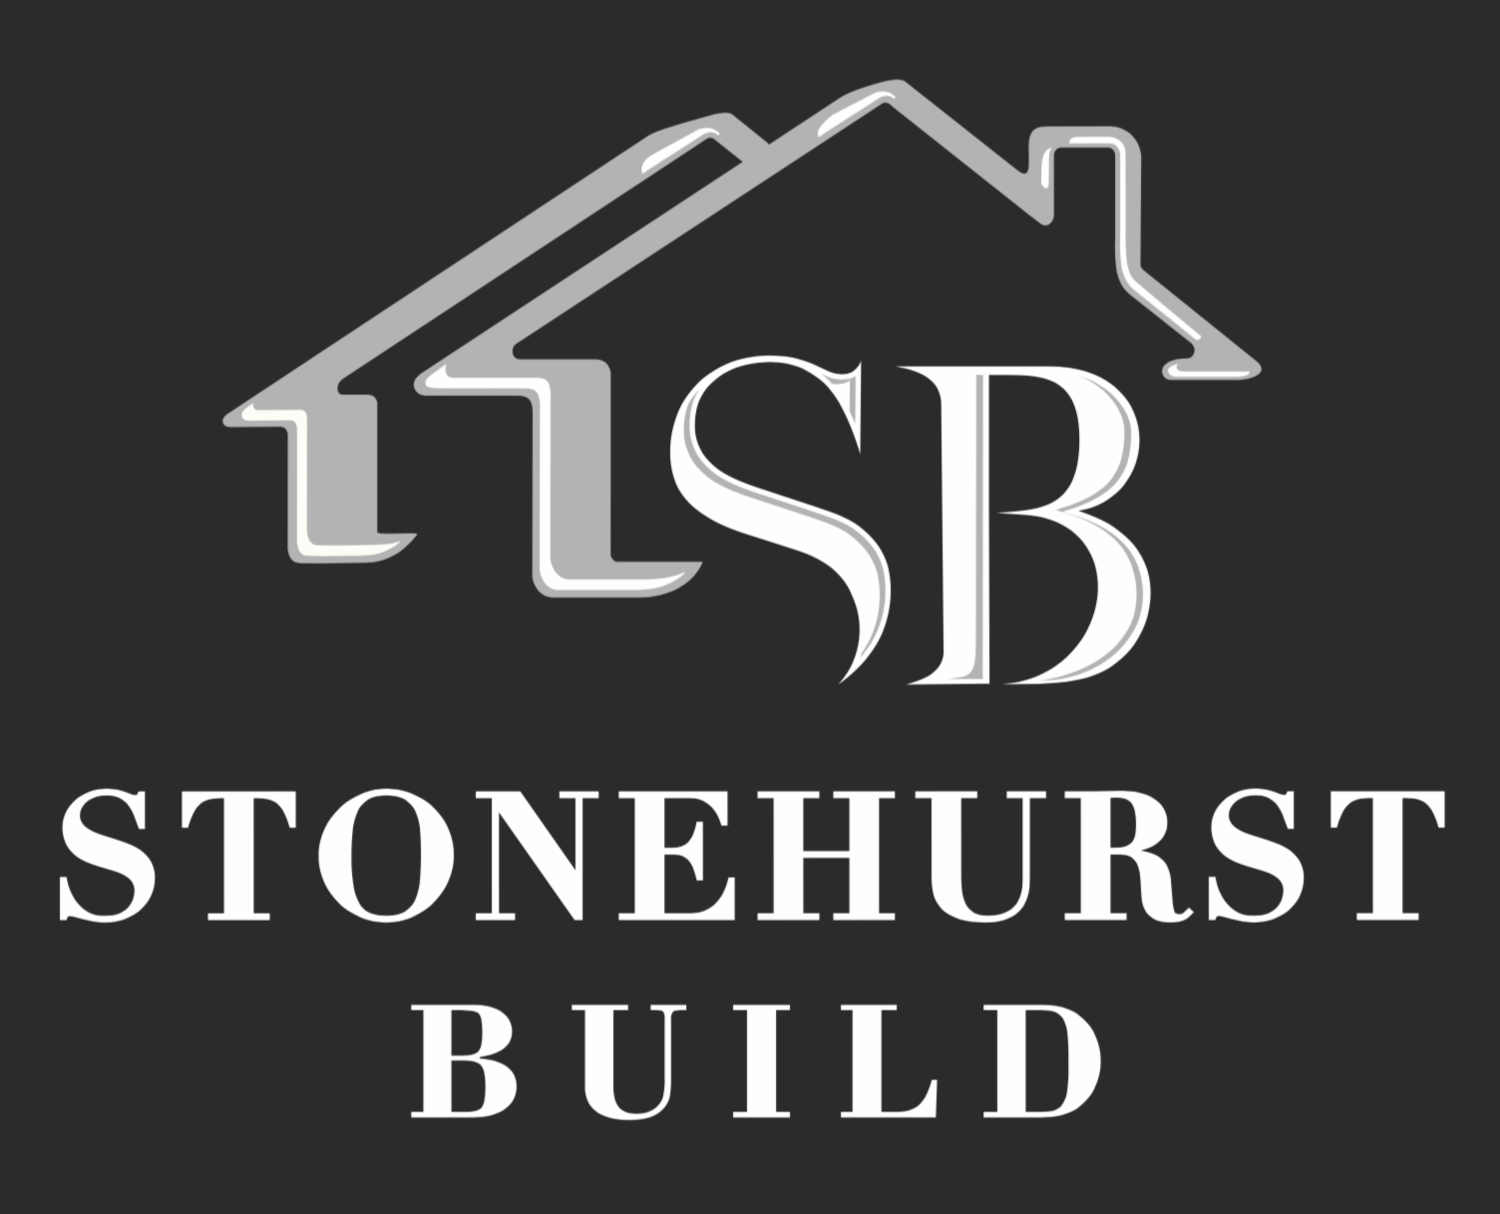 Stonehurst Build